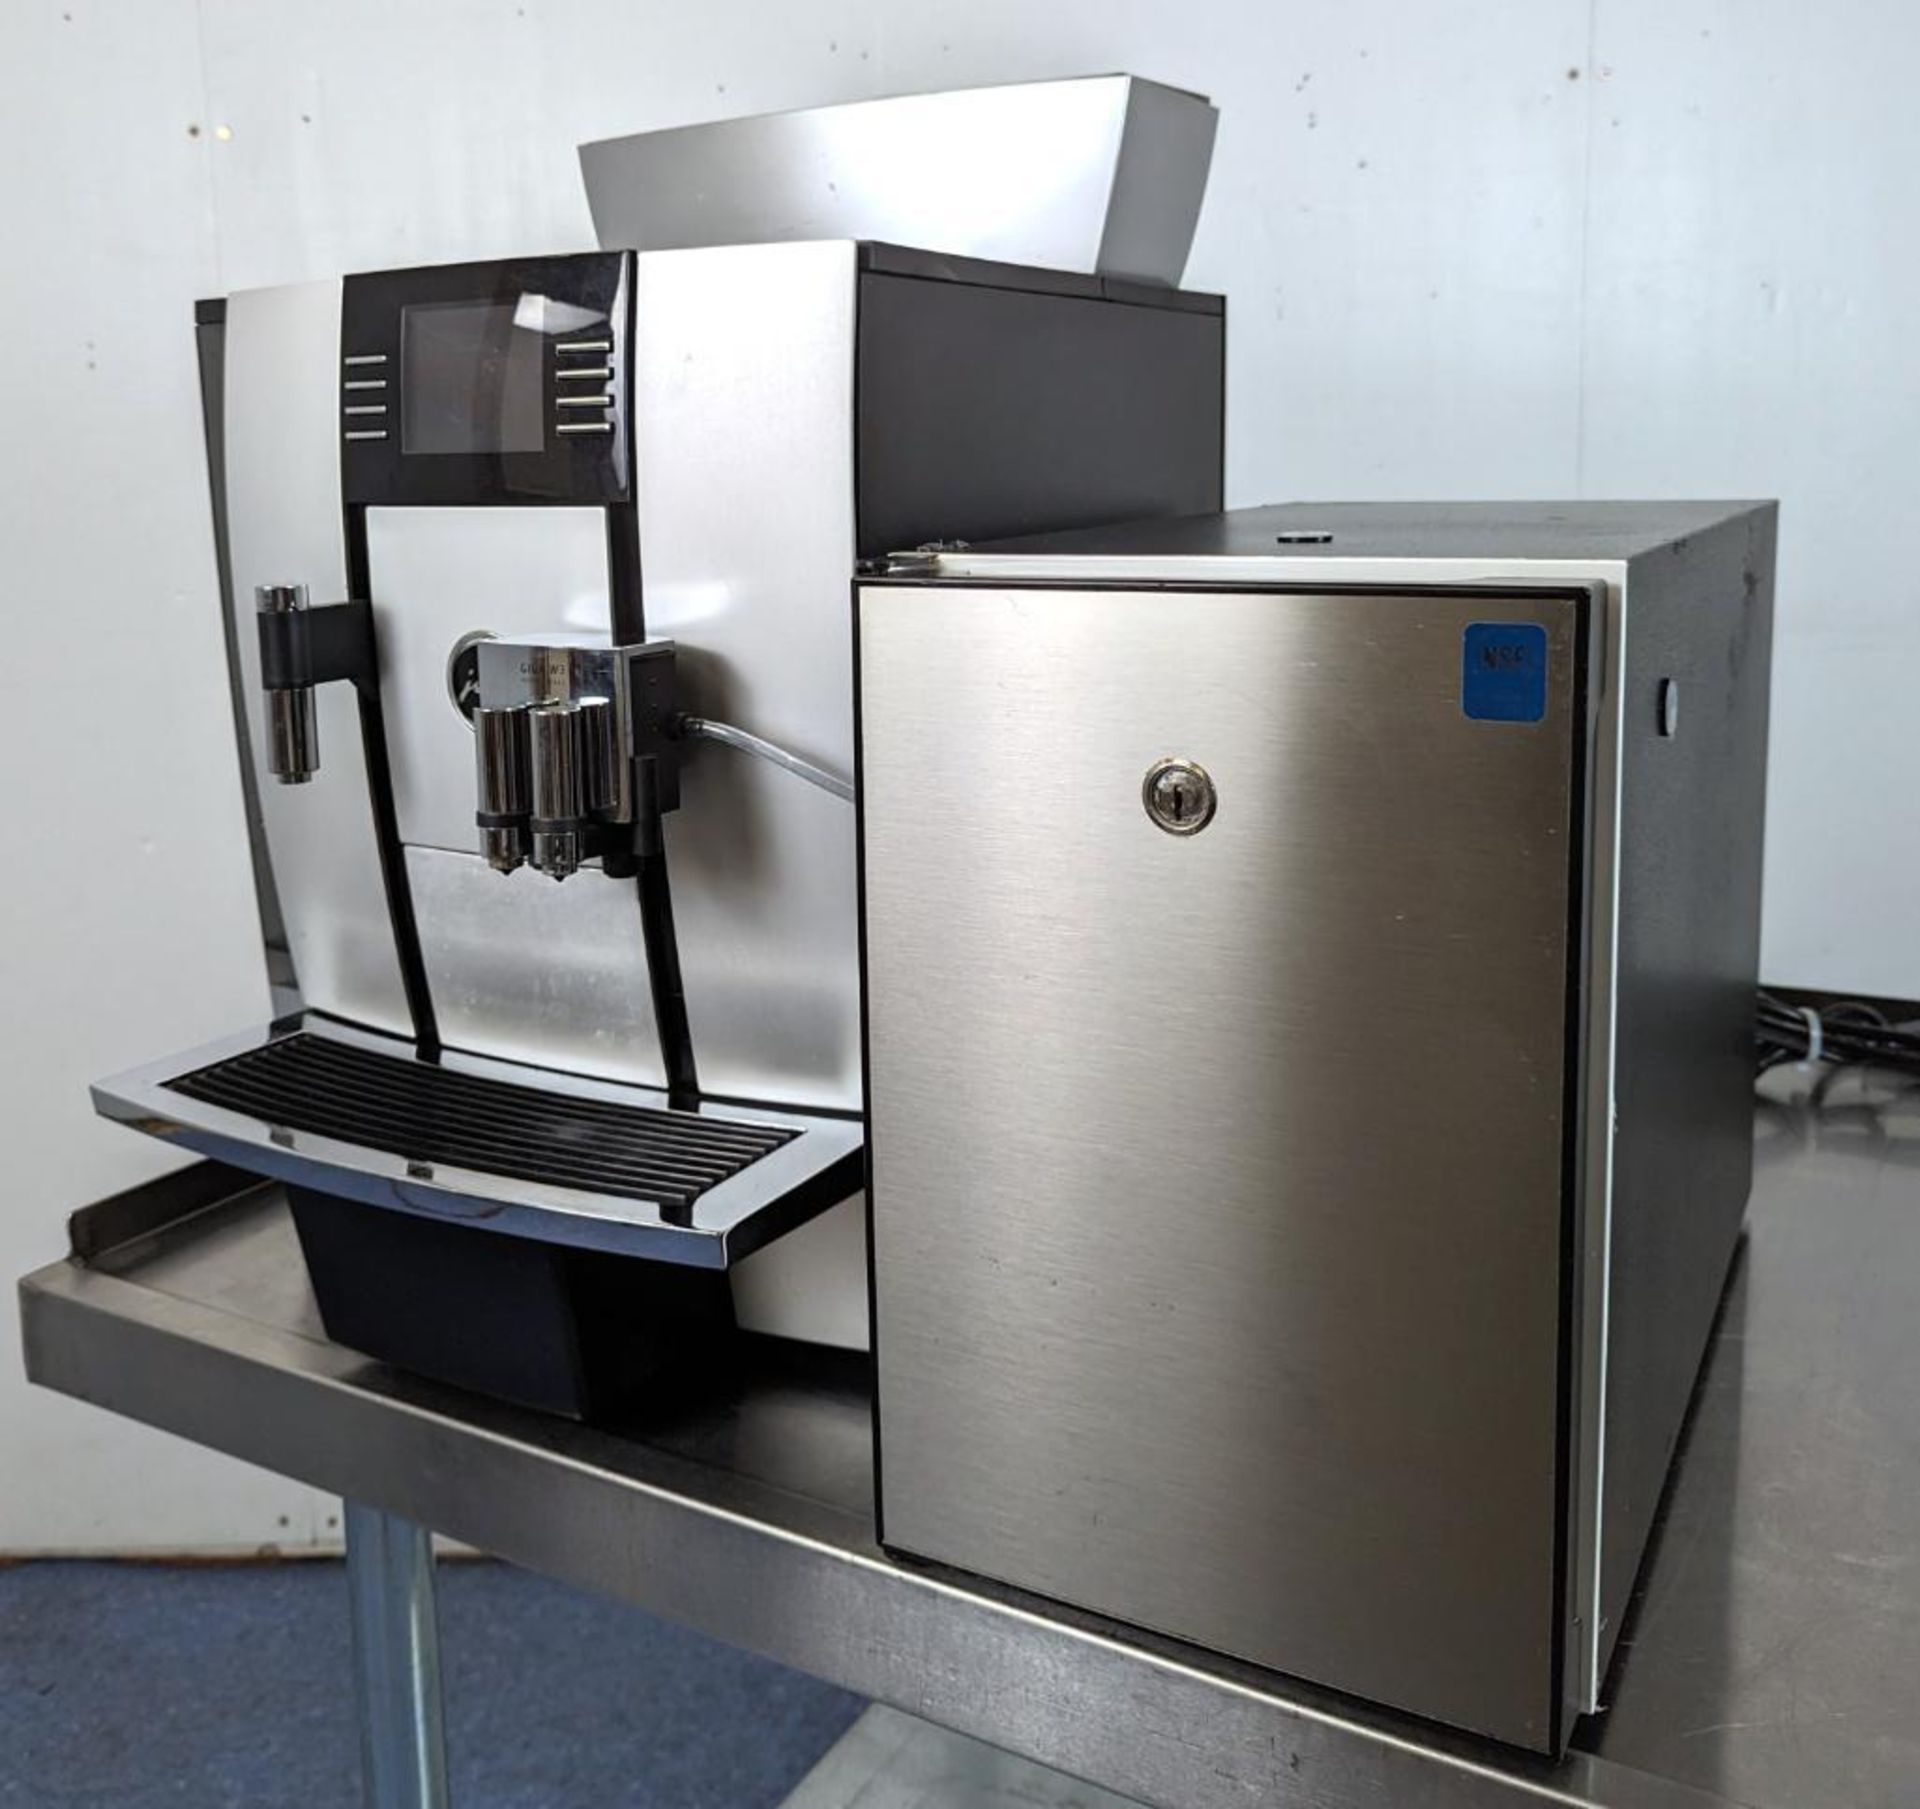 JURA GIGA W3 PROFESSIONAL AUTOMATIC COFFEE MACHINE WITH MILK COOLER - Image 2 of 14